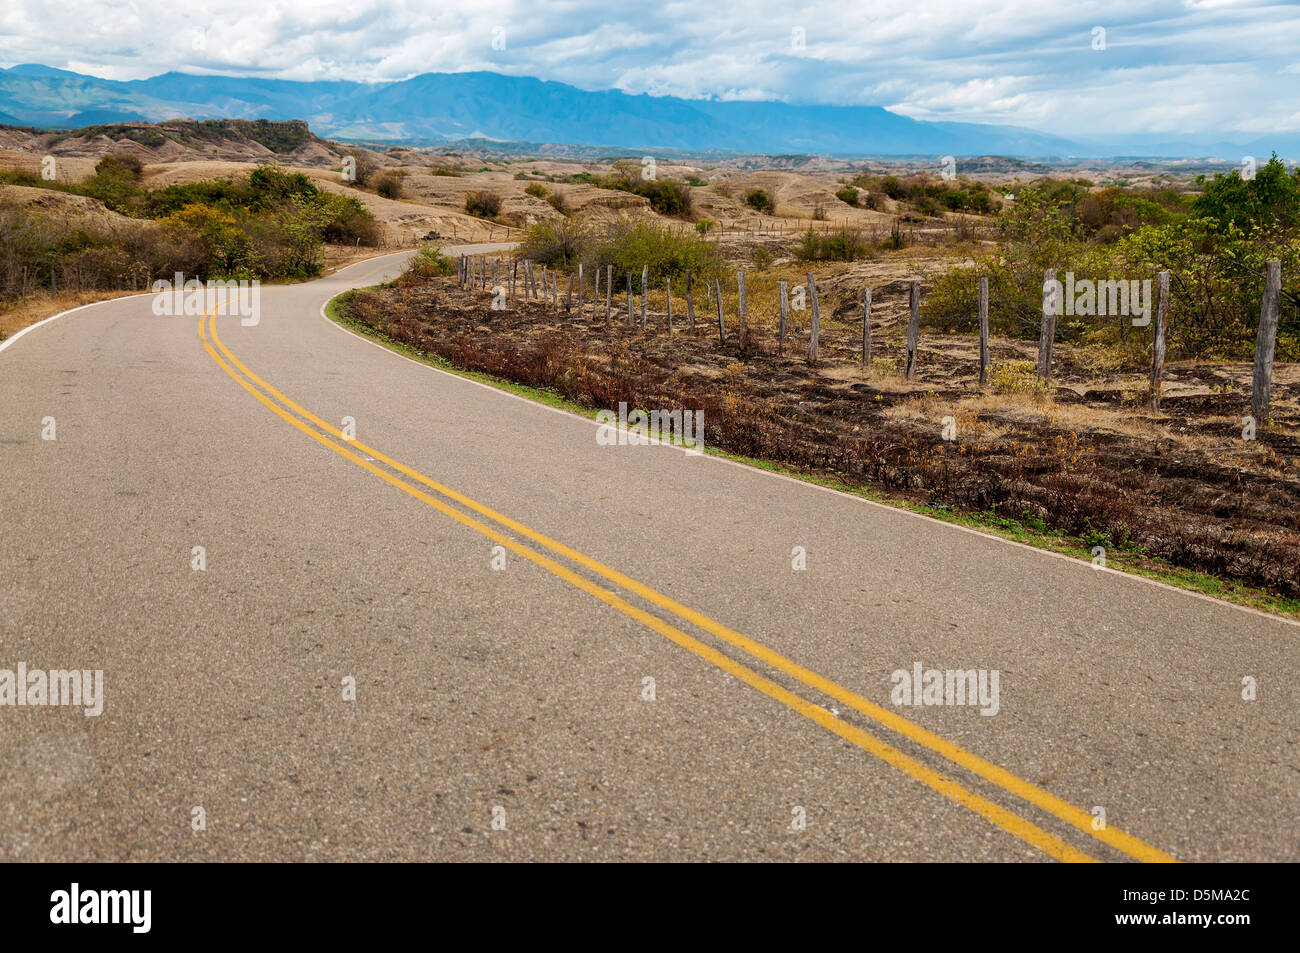 Long winding road through a dry arid landscape Stock Photo